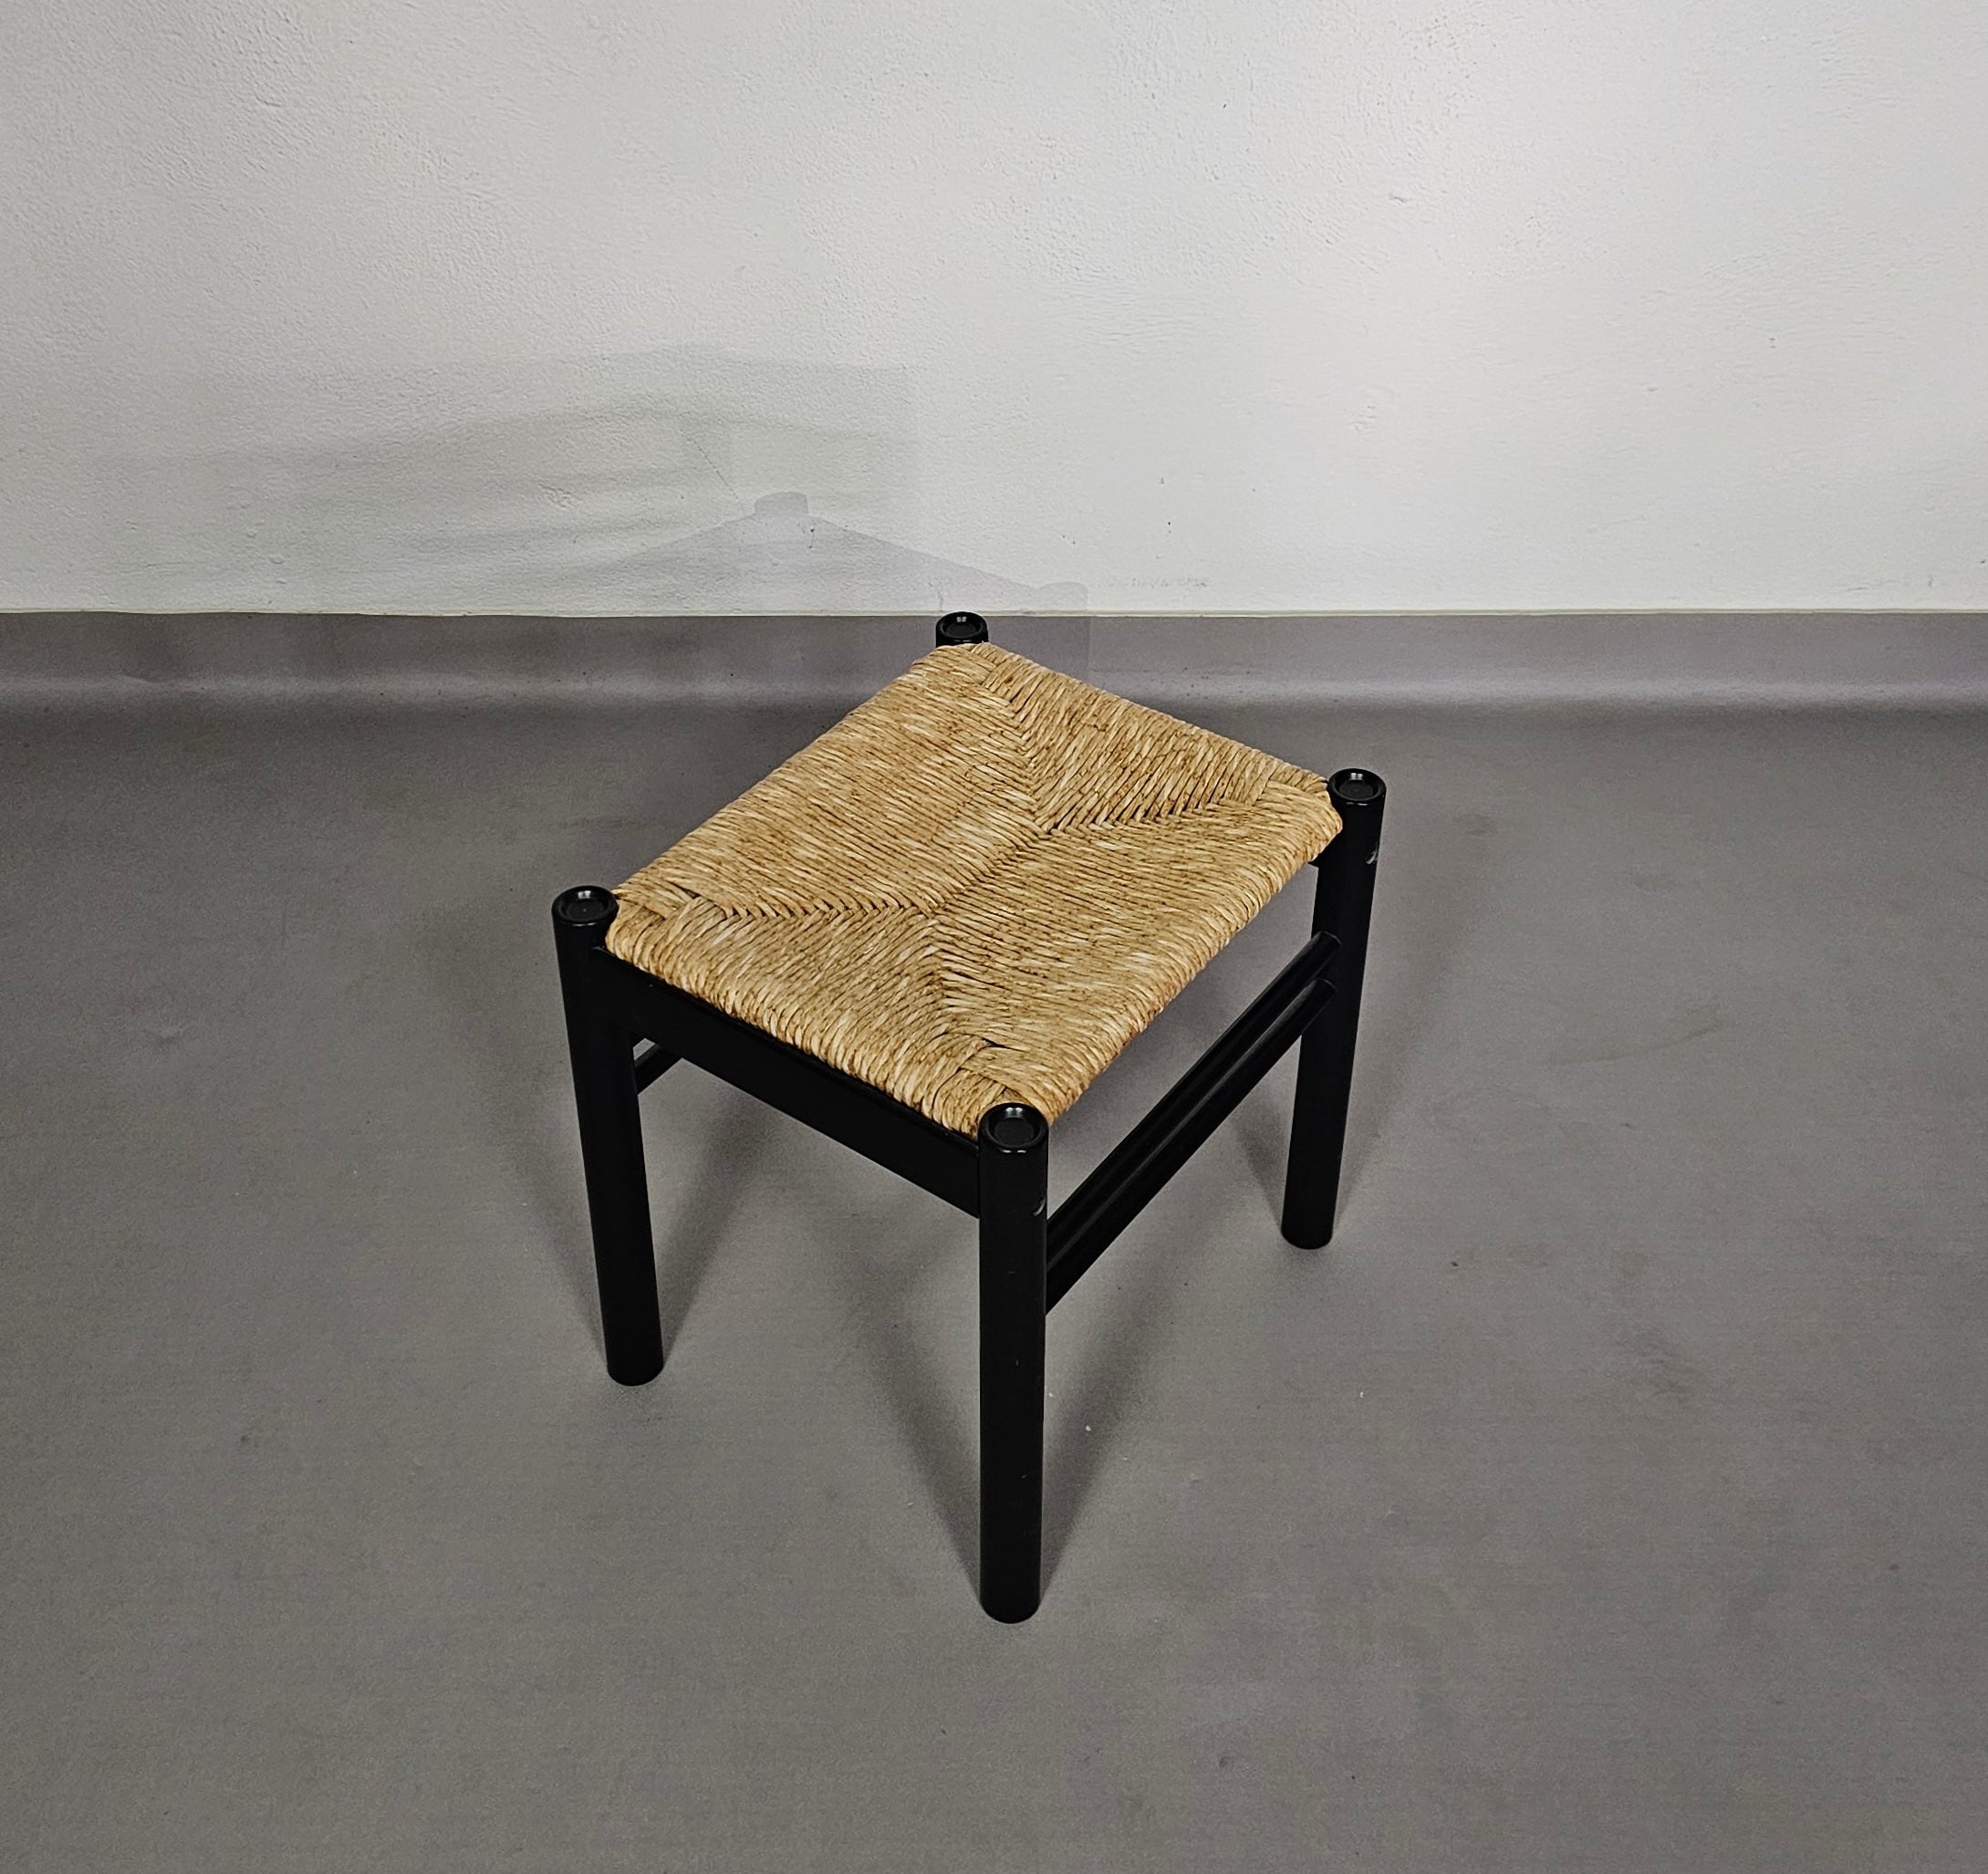 2 x Ibisco stool / rare rush / woven